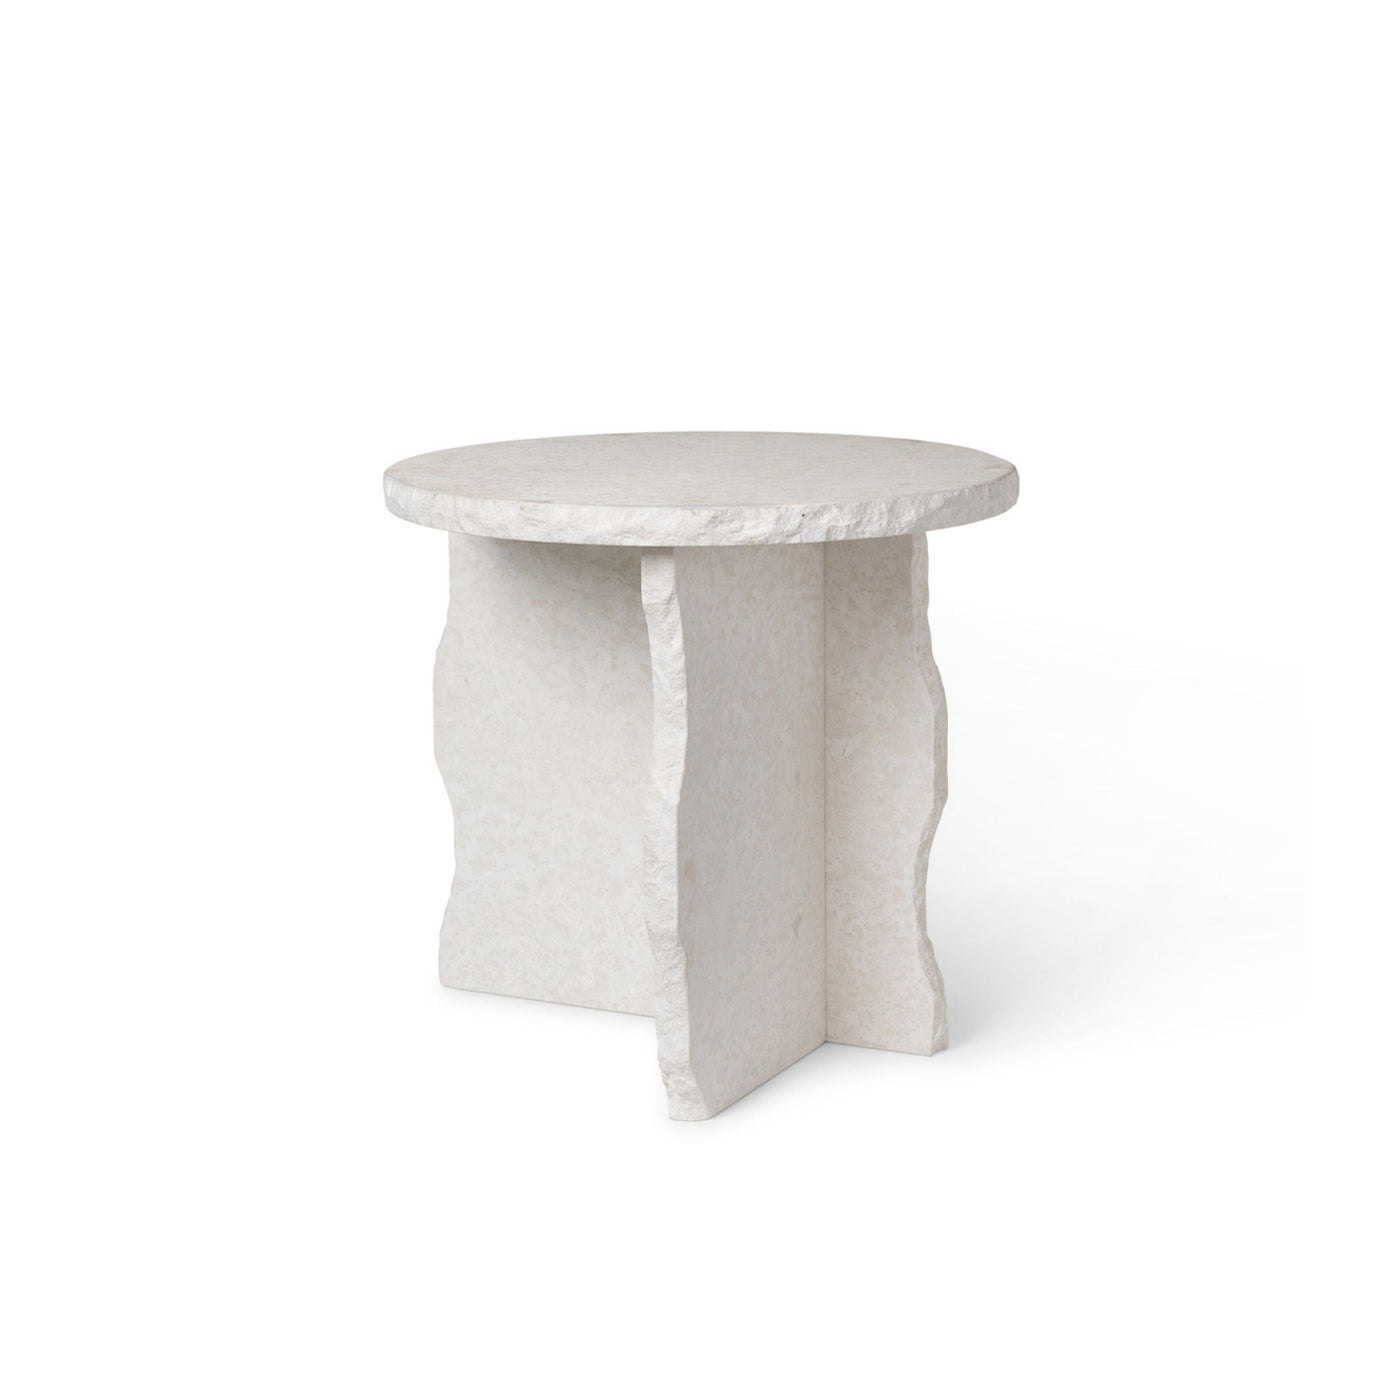 Ferm Living Mineral Sculptural Table. Shop online at someday designs.